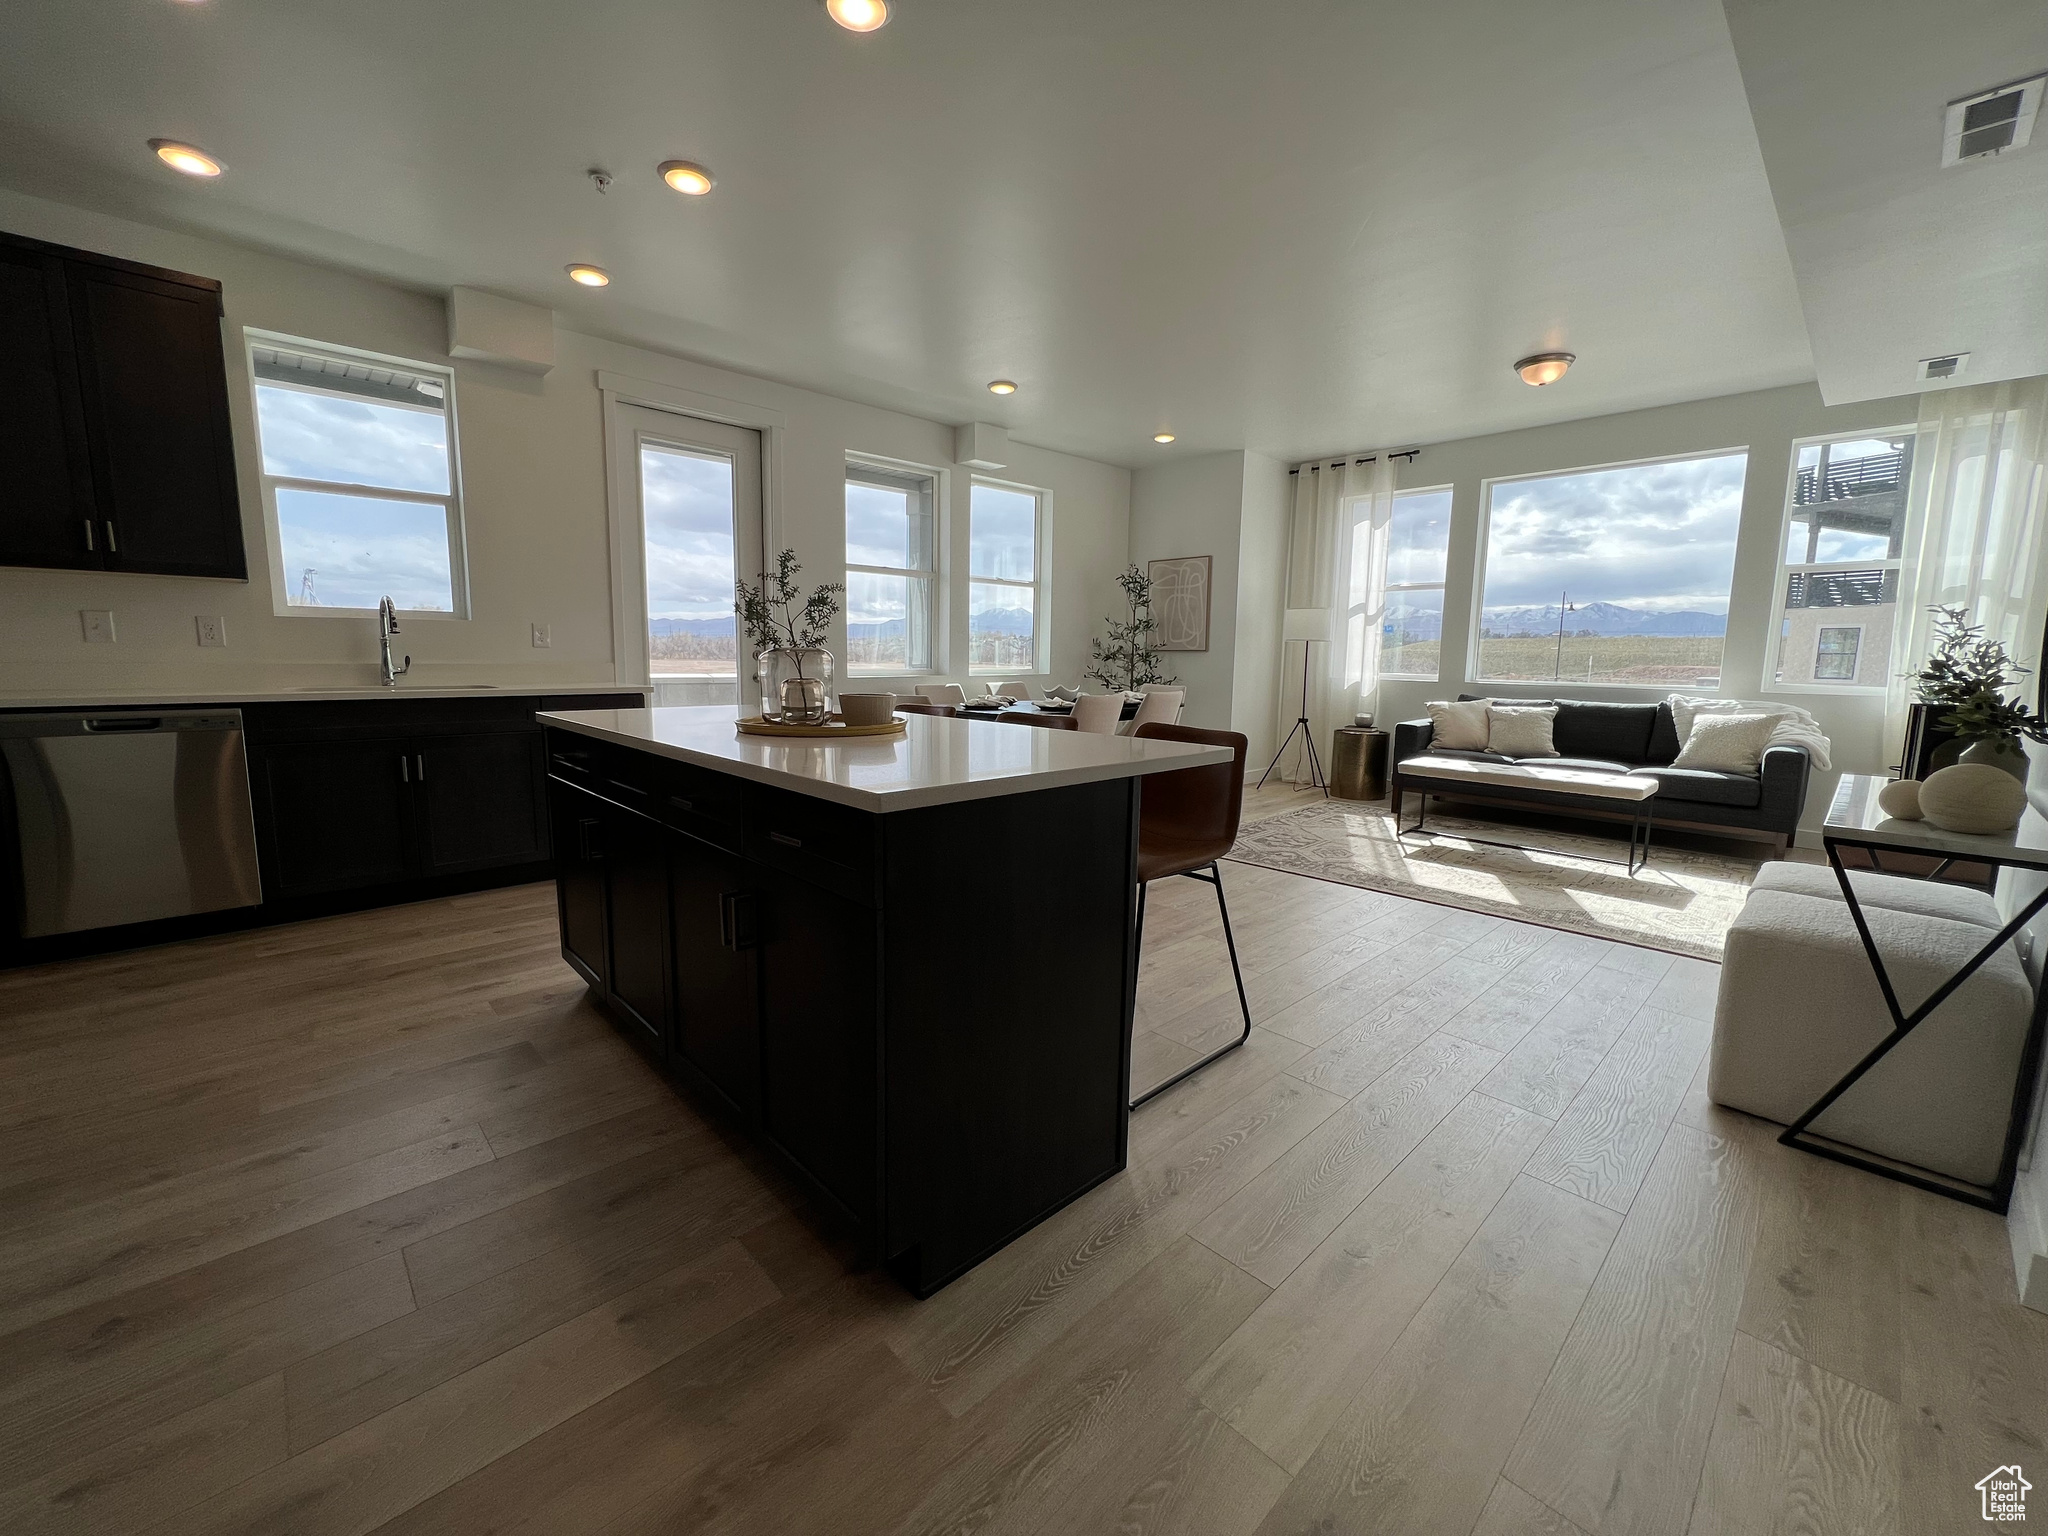 Kitchen featuring a center island, plenty of natural light, light hardwood / wood-style floors, and dishwasher